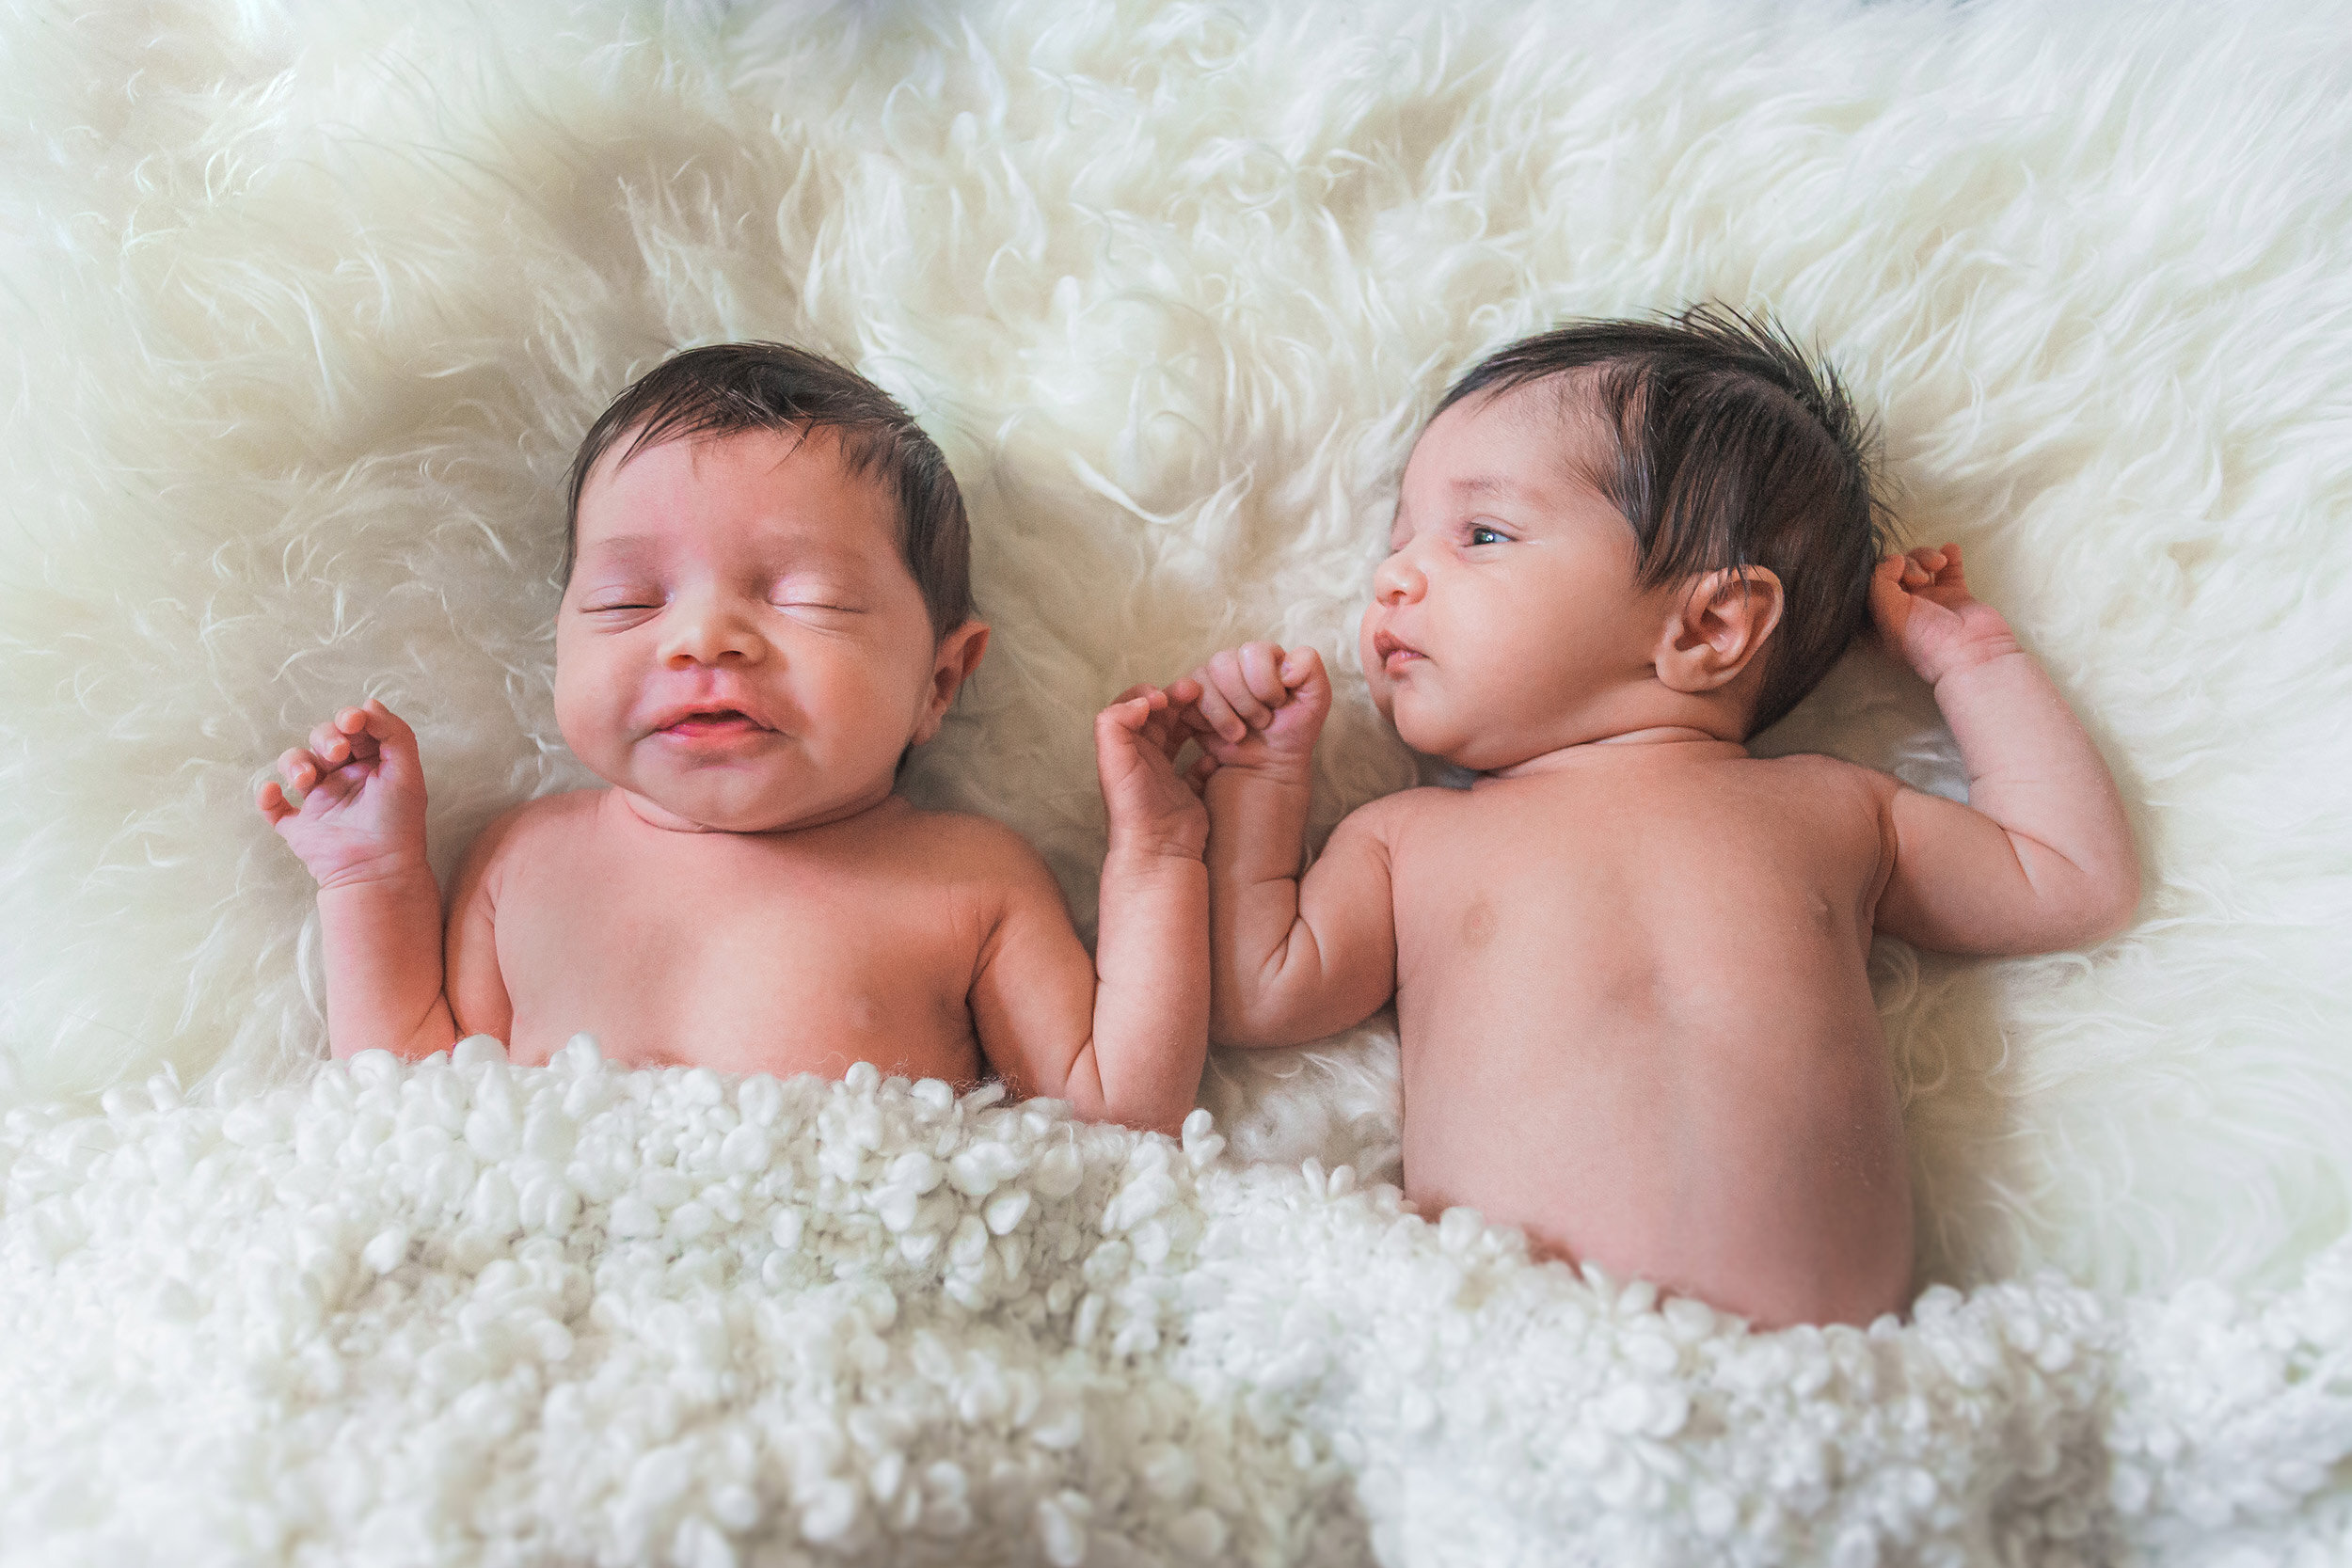 Marblehead Newborn Portrait Photographer | Stephen Grant Photography